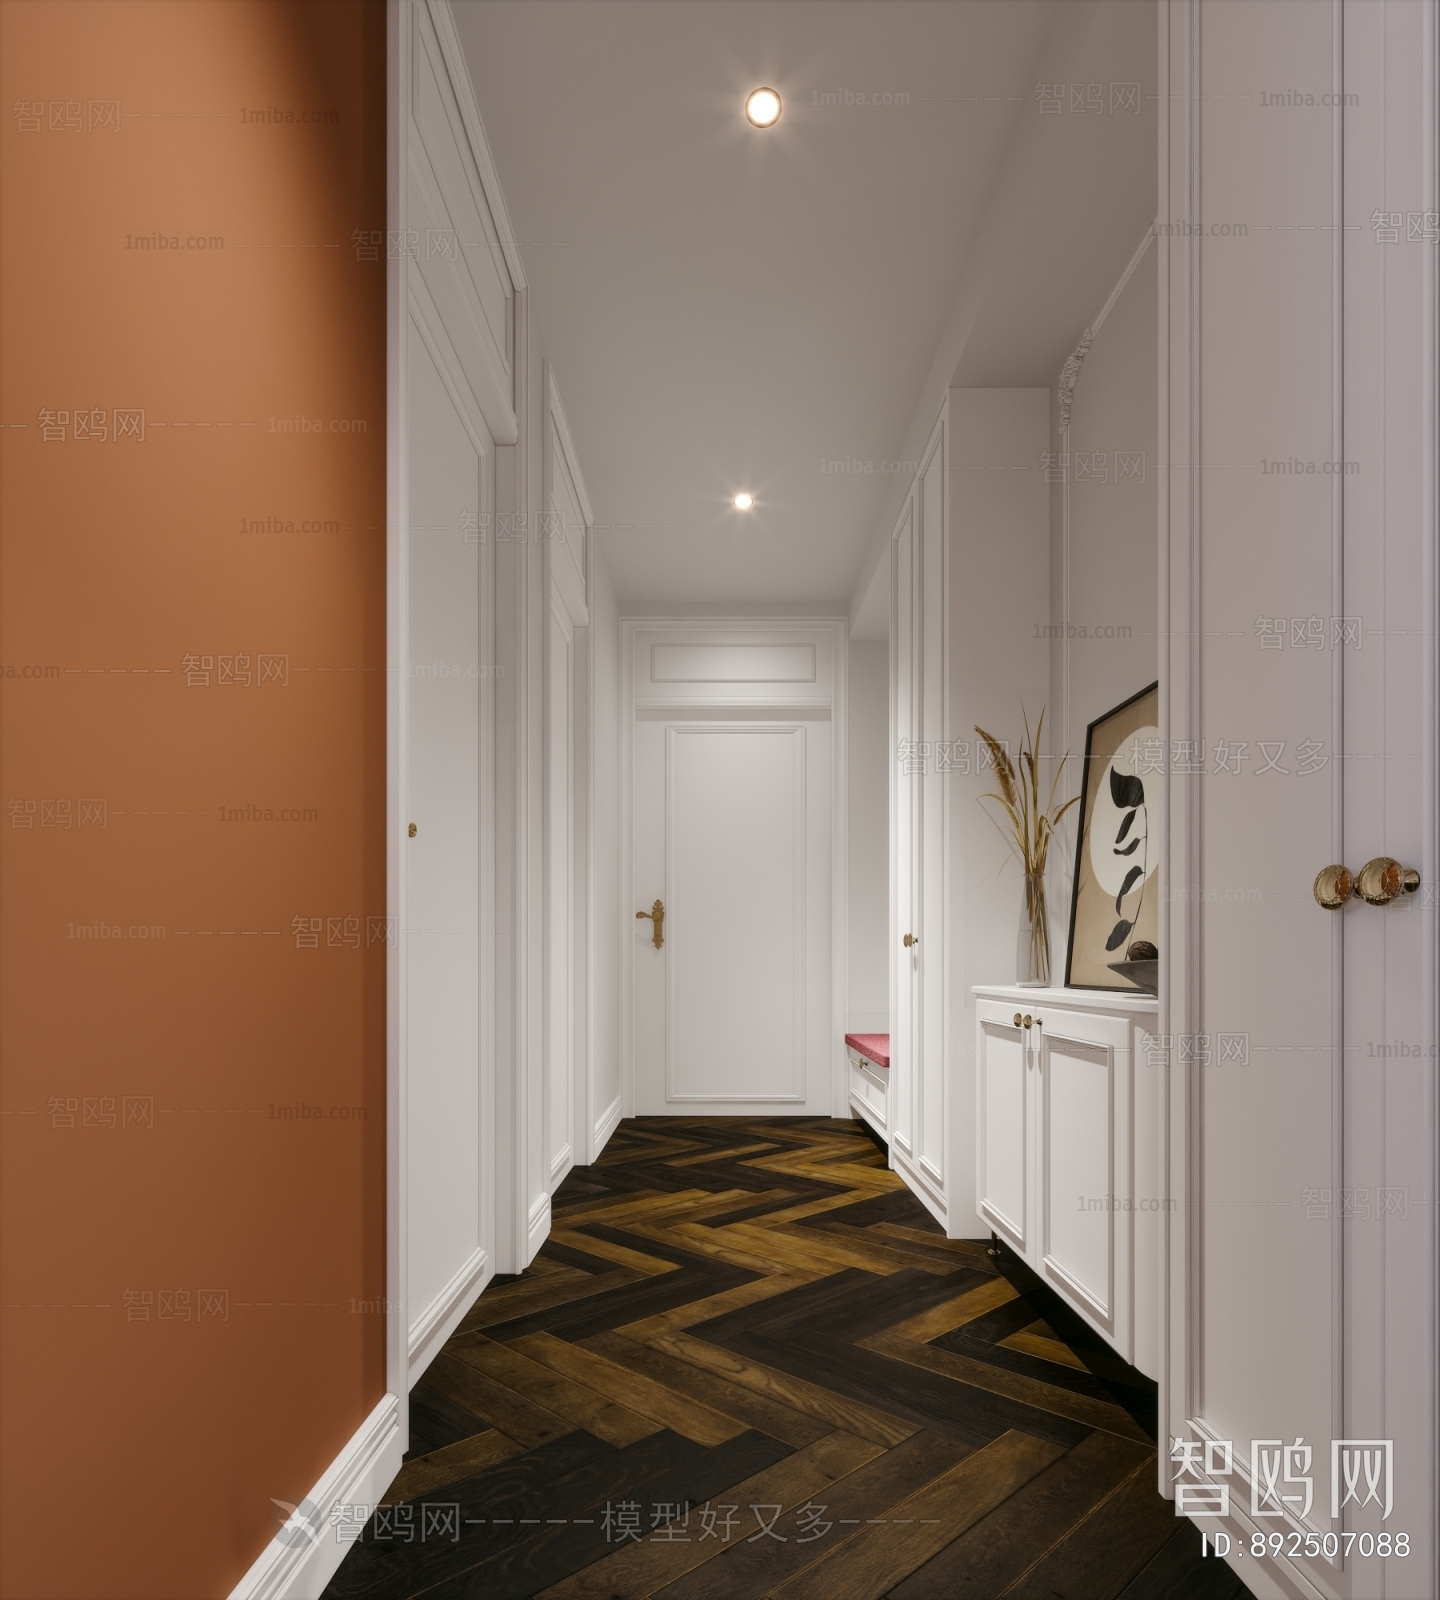 American Style Hallway